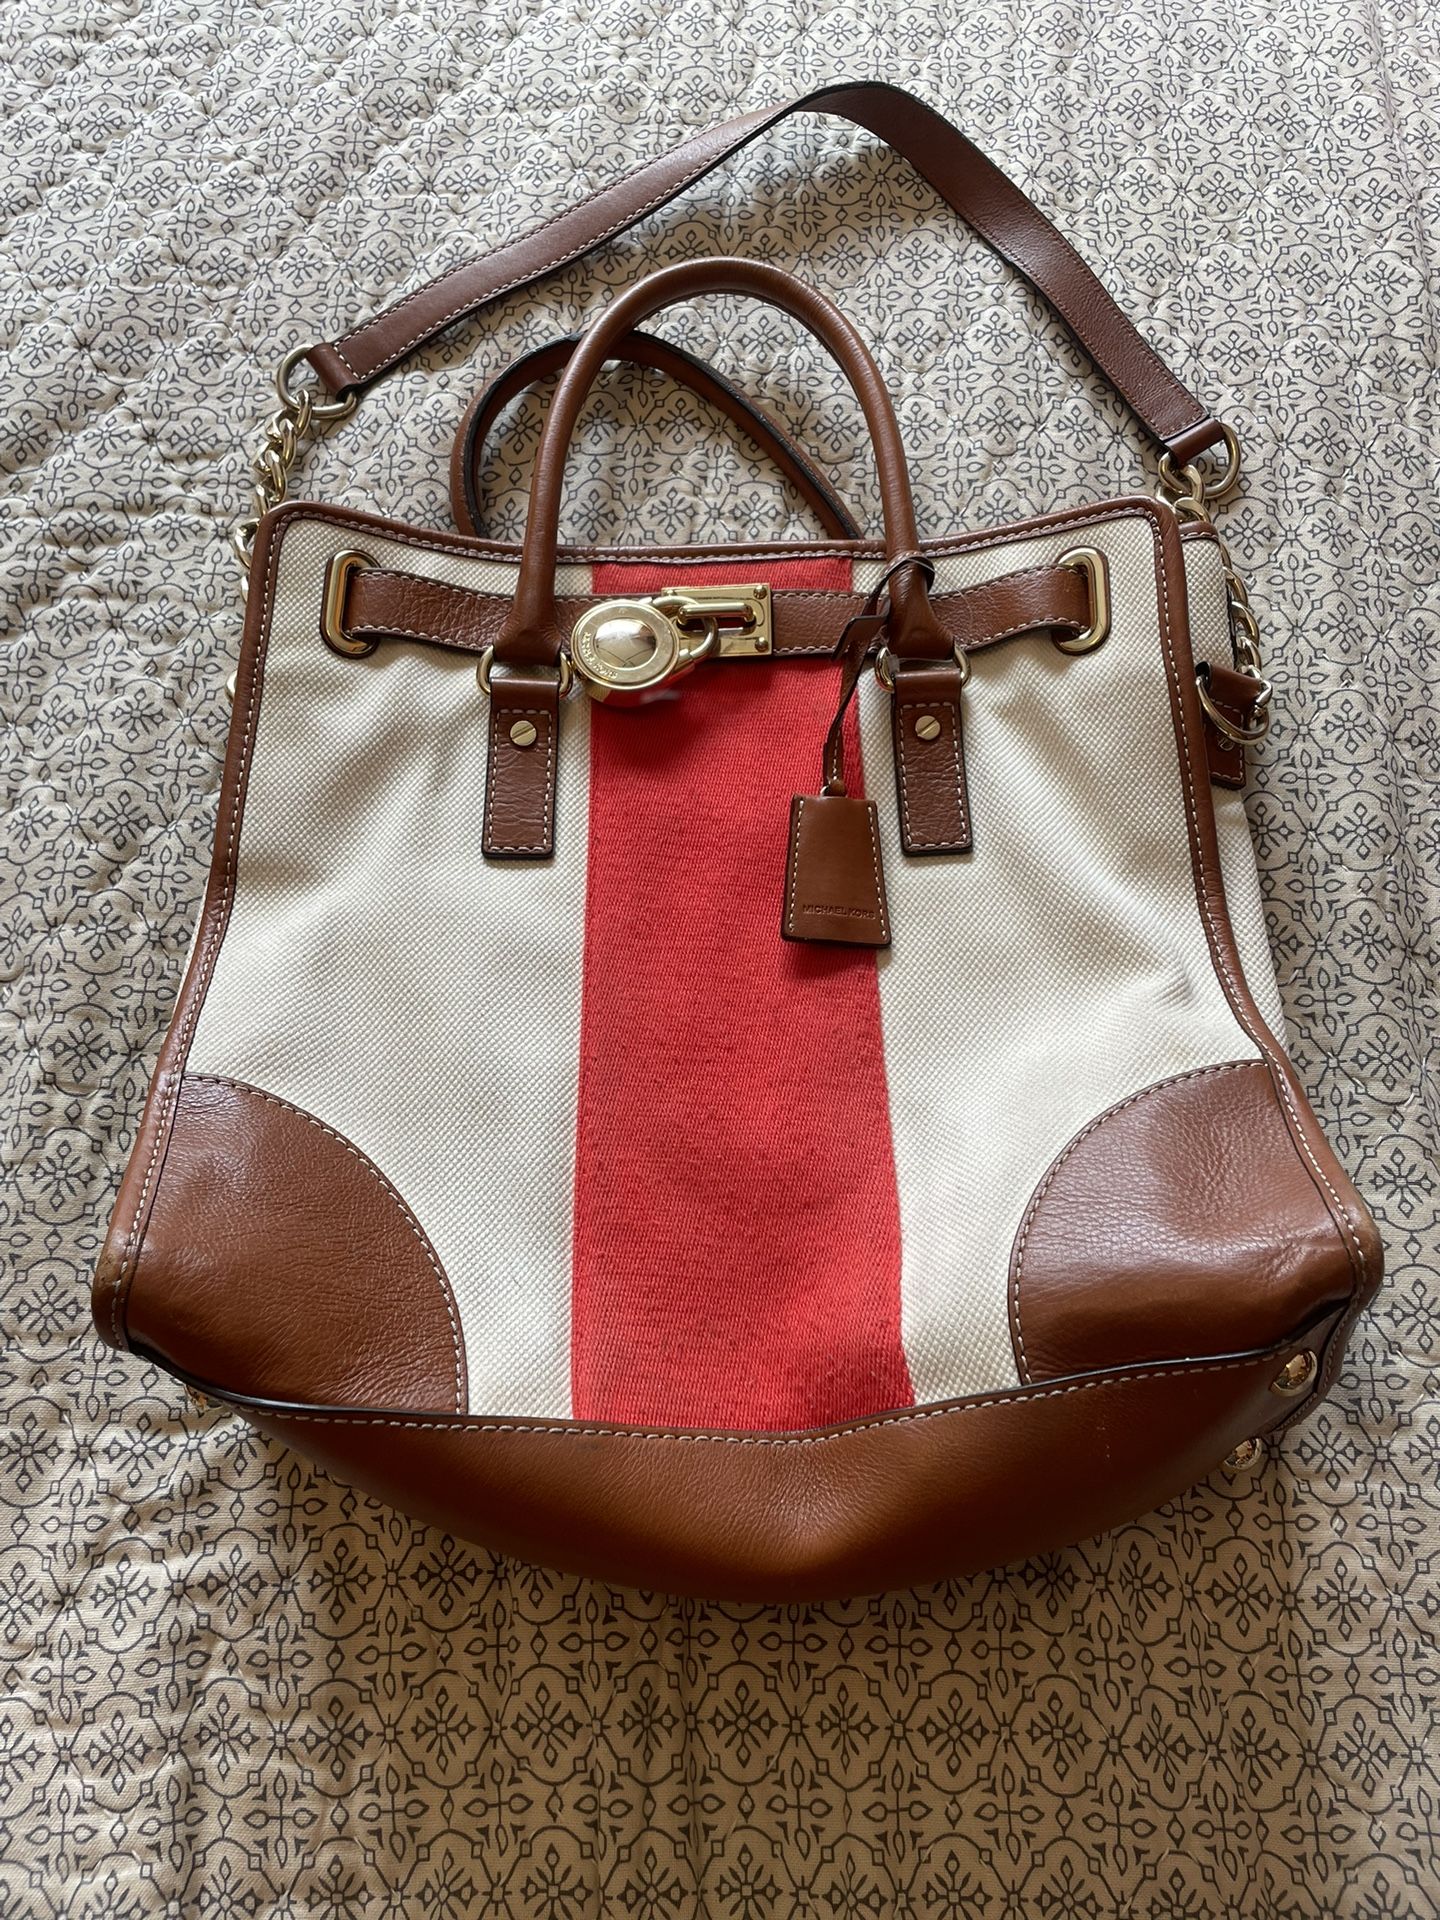 Michael Kors Preowned Handbag Orange White Leather